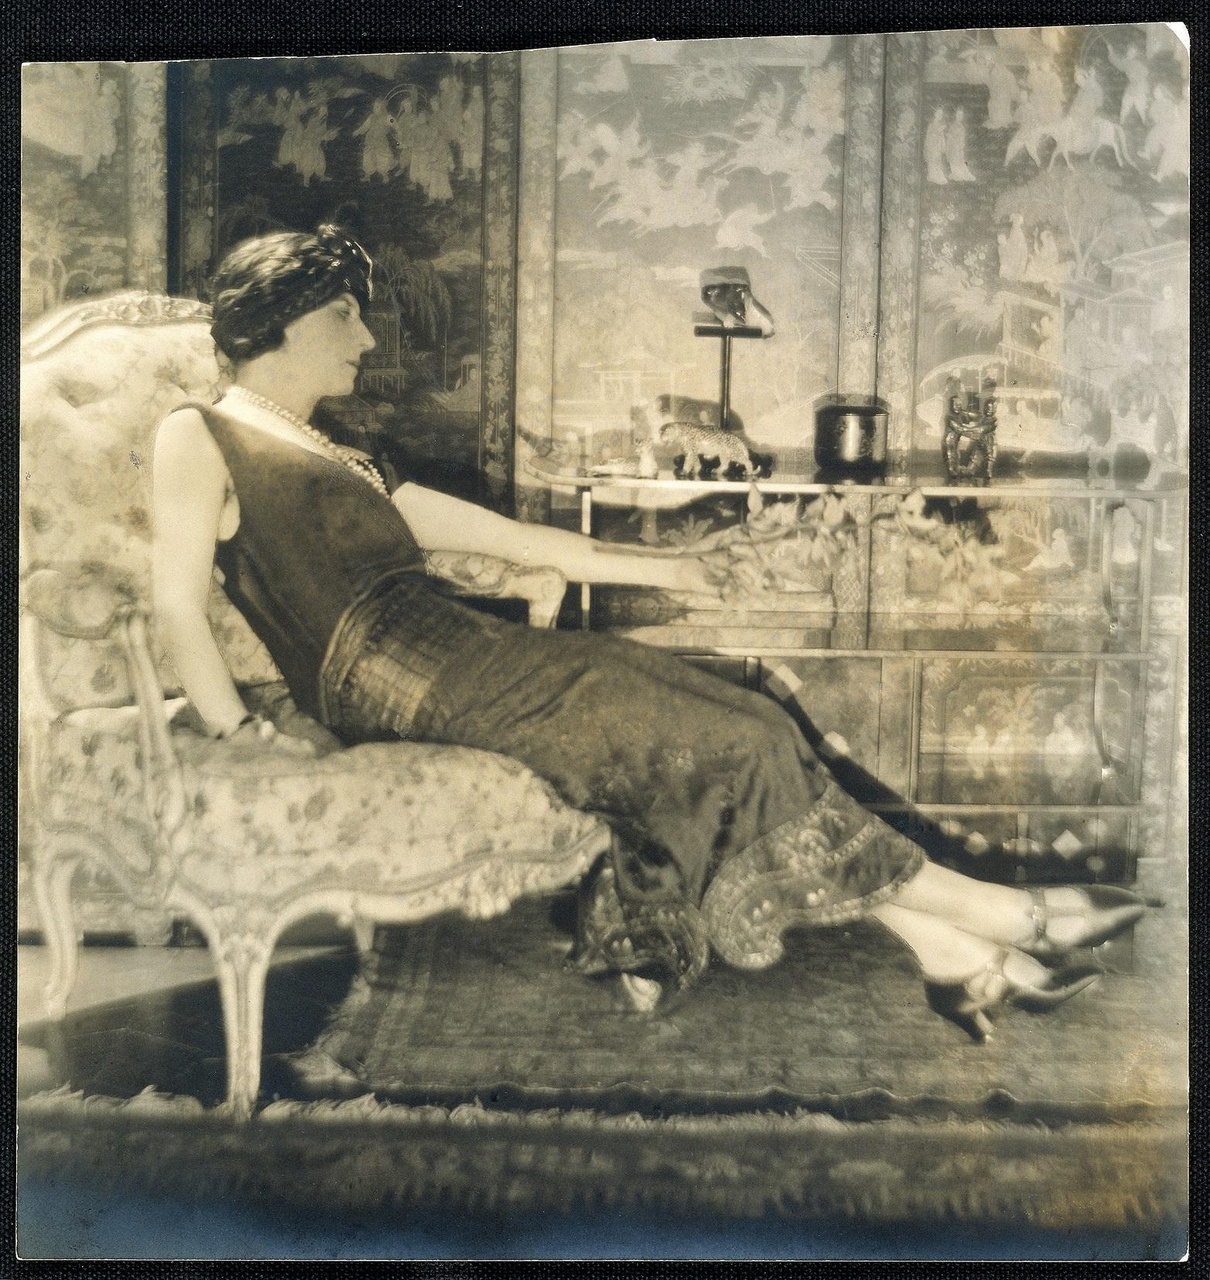 貞．杜桑，由德．梅耶男爵（Baron de Meyer）拍攝，1923年。阿道夫．德．梅耶男爵（Baron Adolph de Meyer） © Cartier